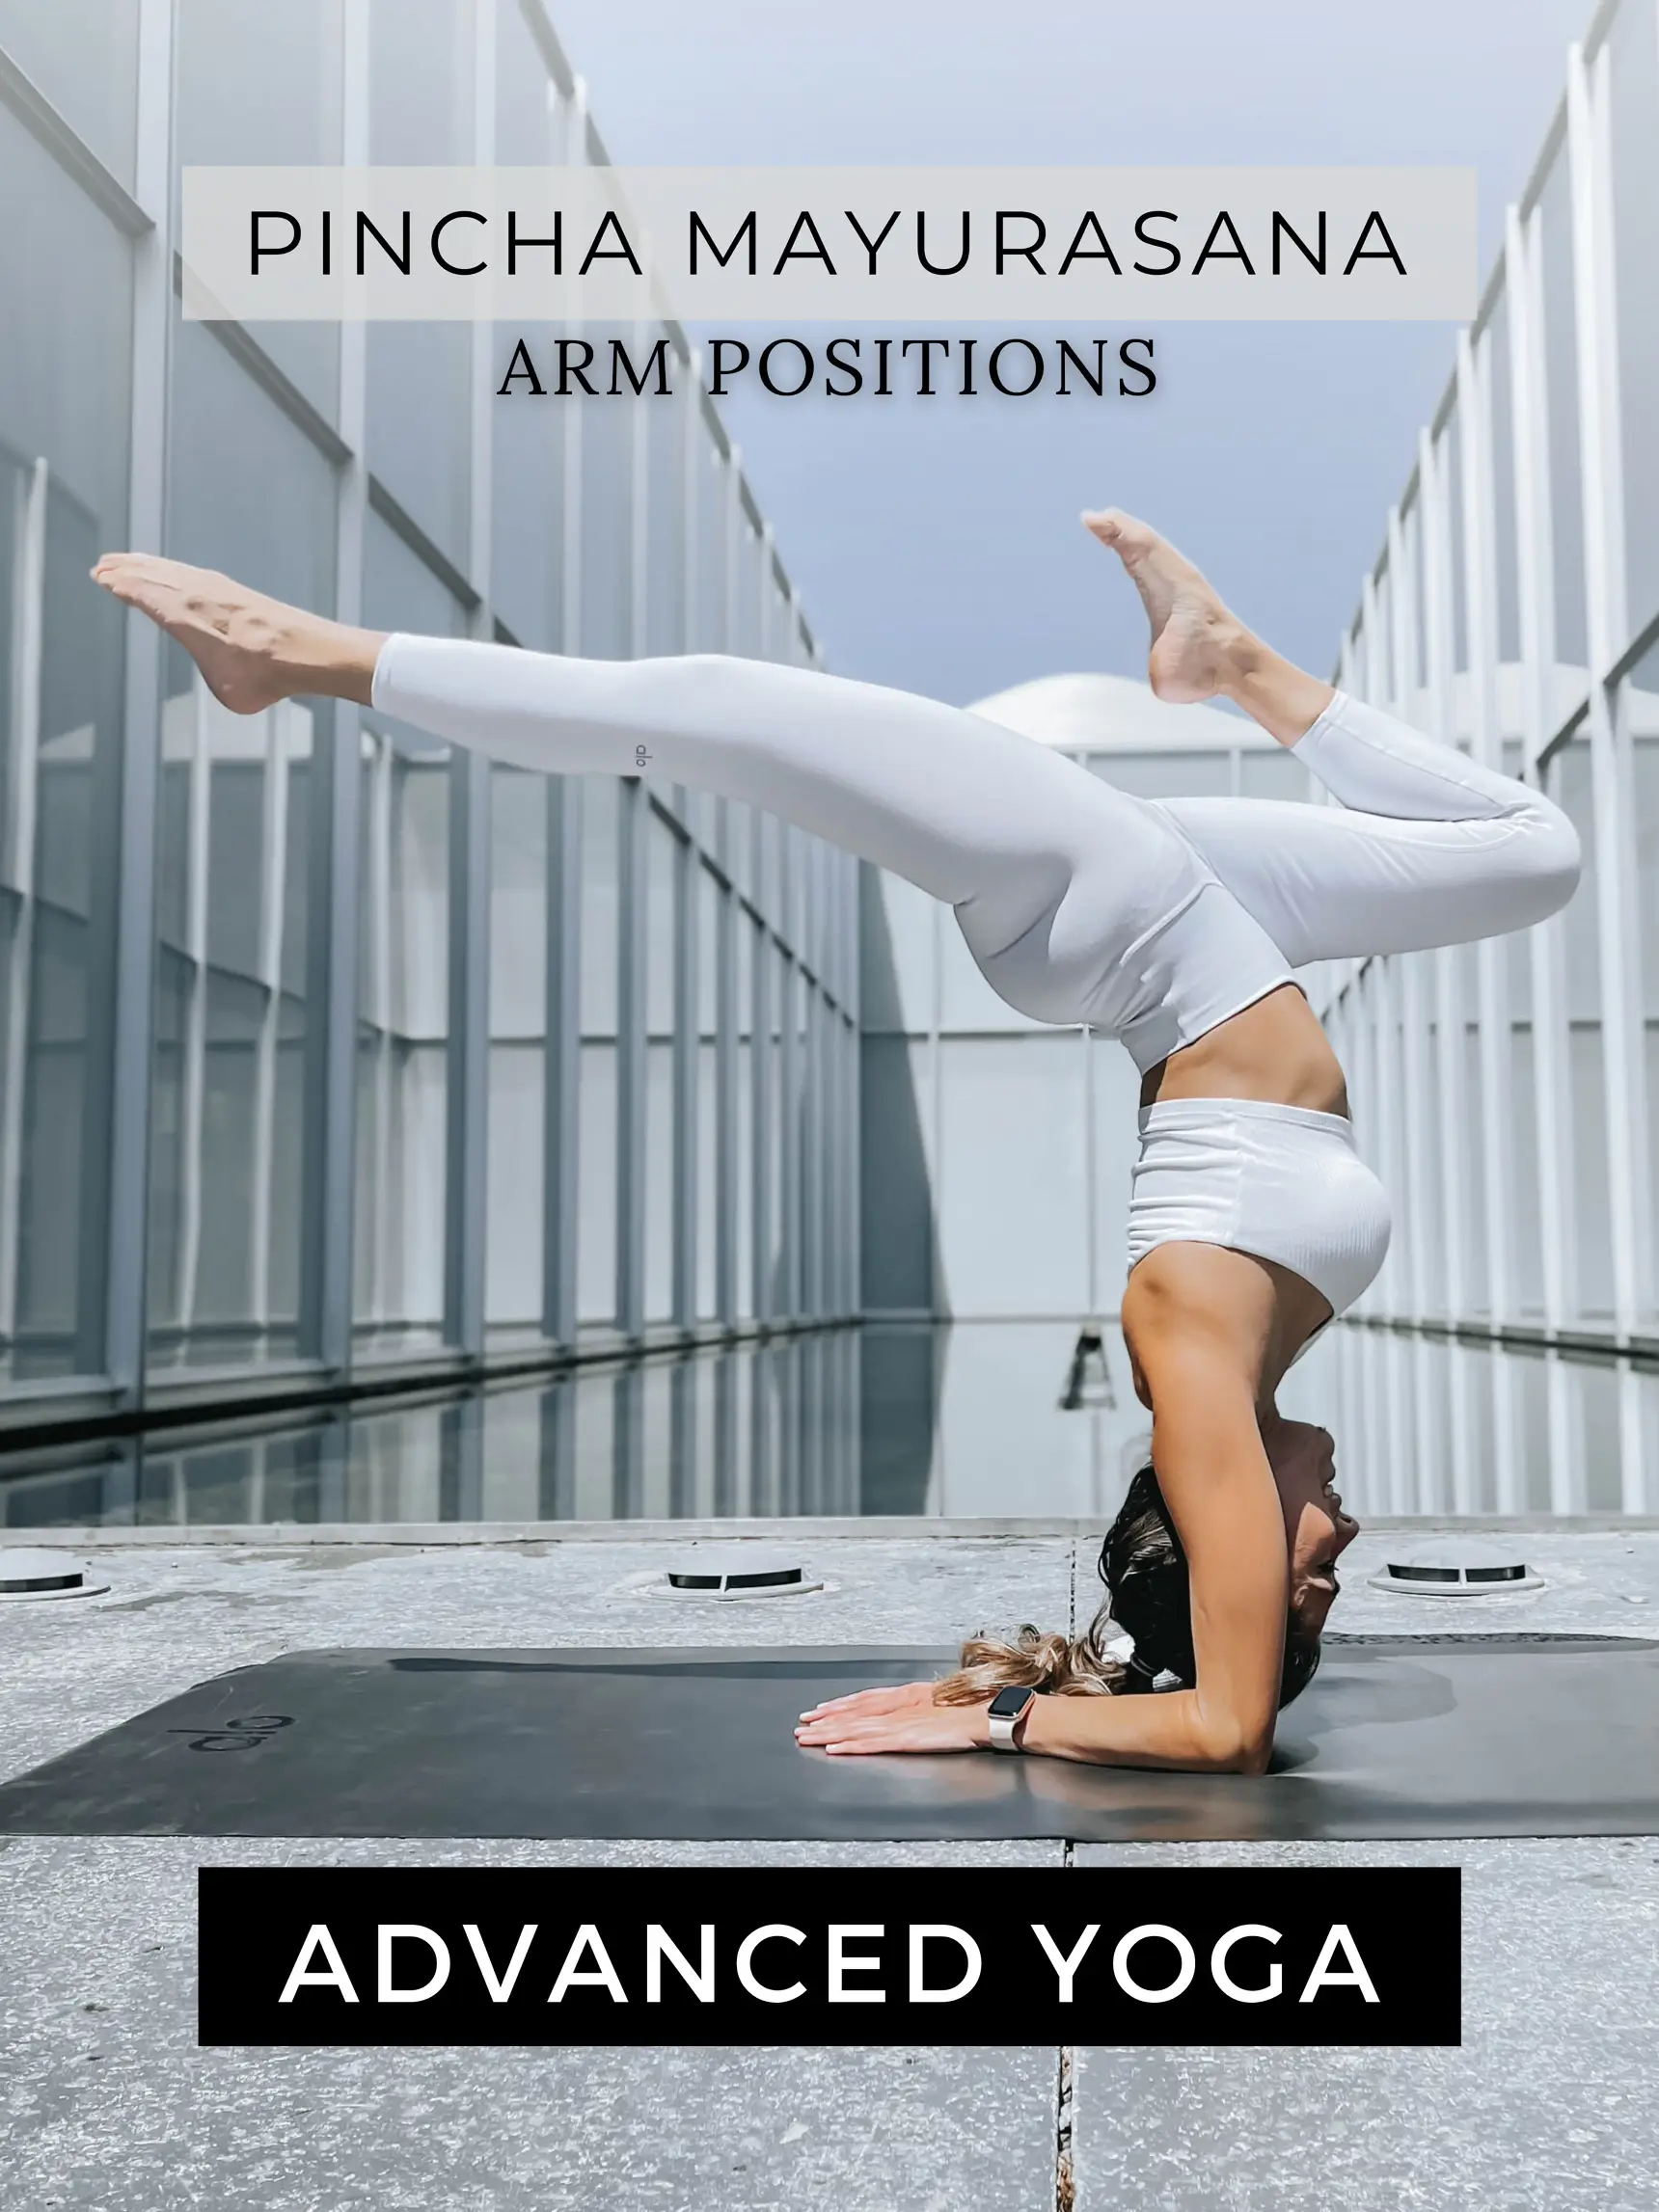 6 Ways To Enter A Forearm Balance Pose (Pincha Mayursana) - Samrat